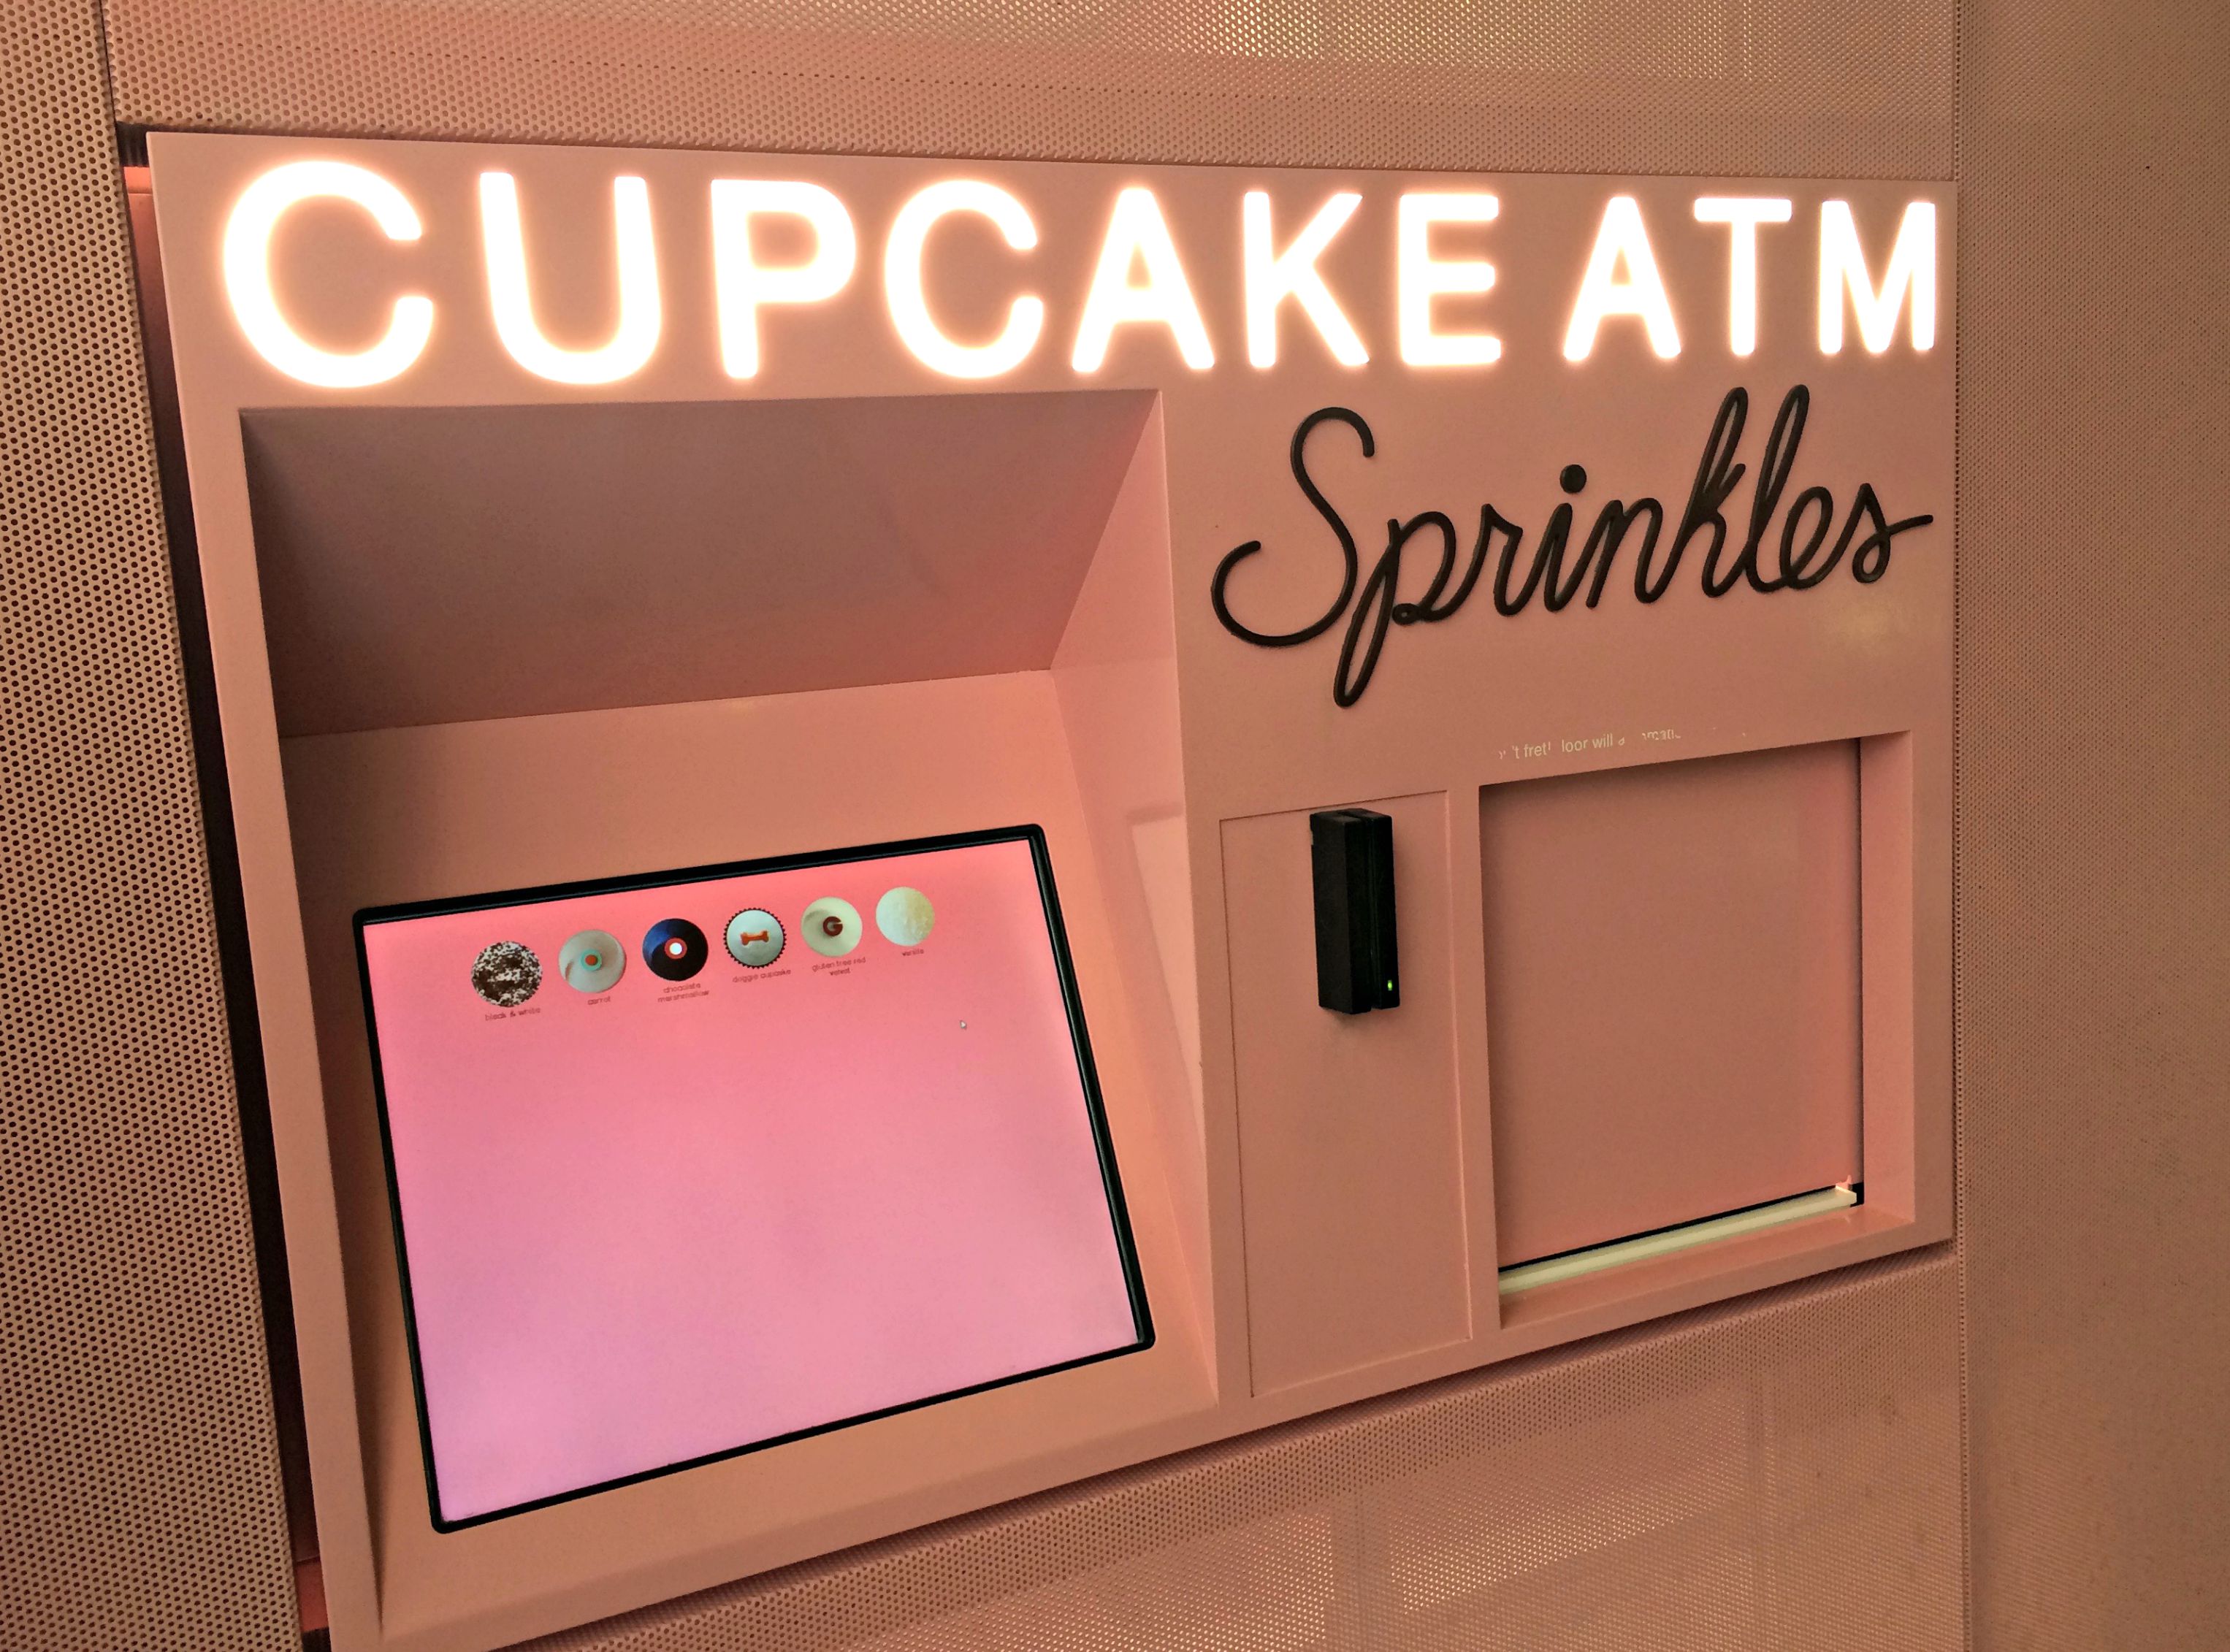 sprinkles cupcake atm